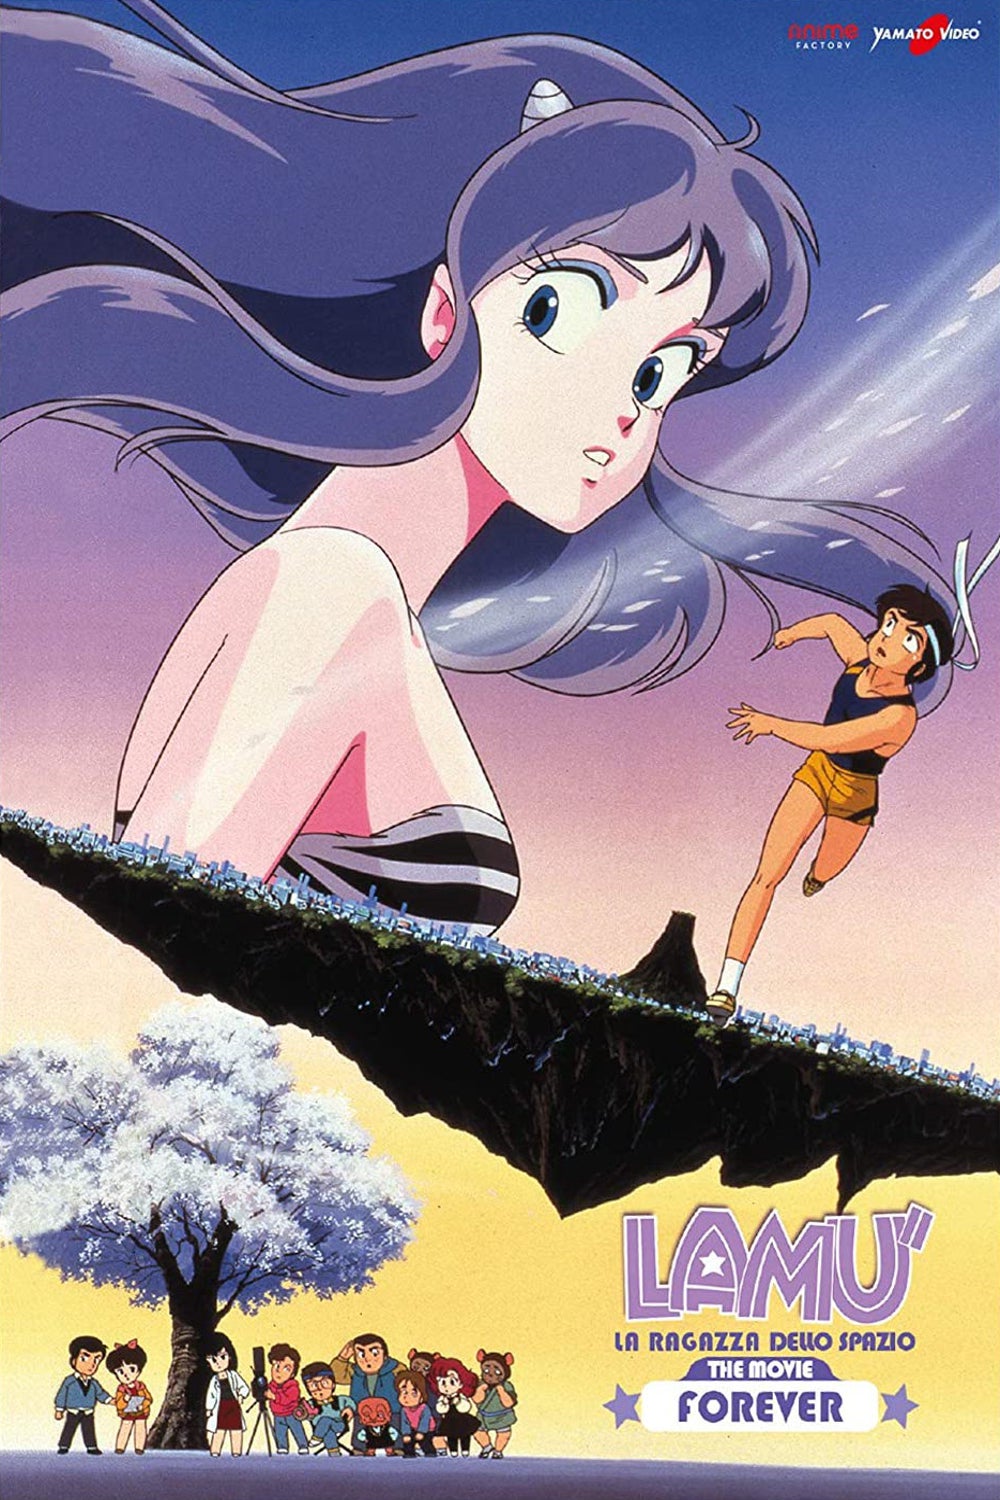 Lamù – Forever [HD] (1986)